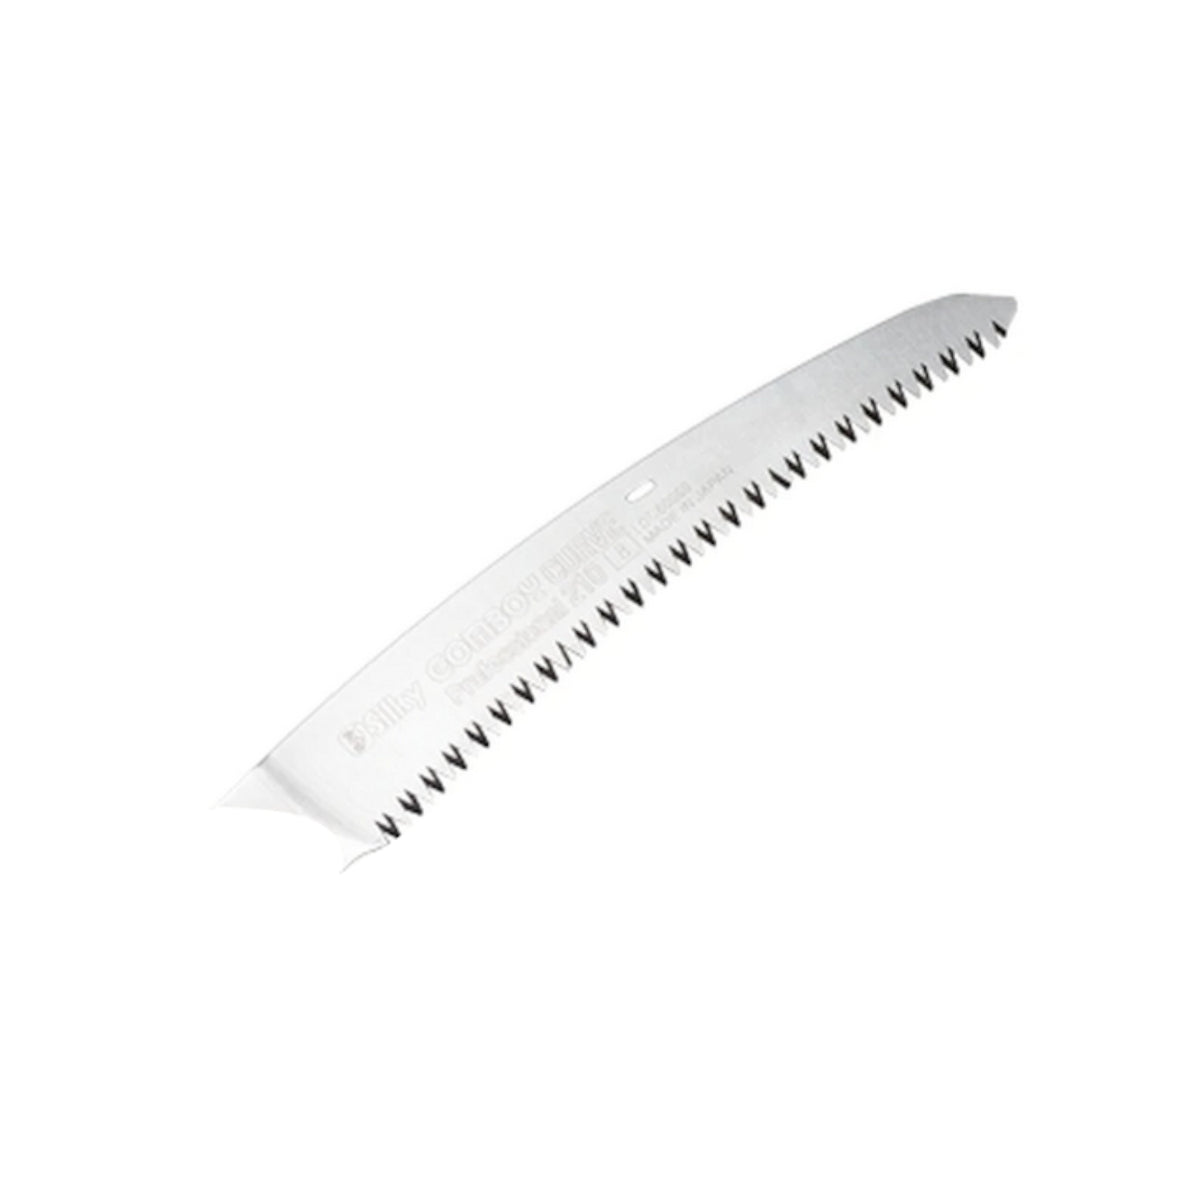 Silky 461-21 GOMBOY CURVE 210mm Replacement Blade Medium Teeth 